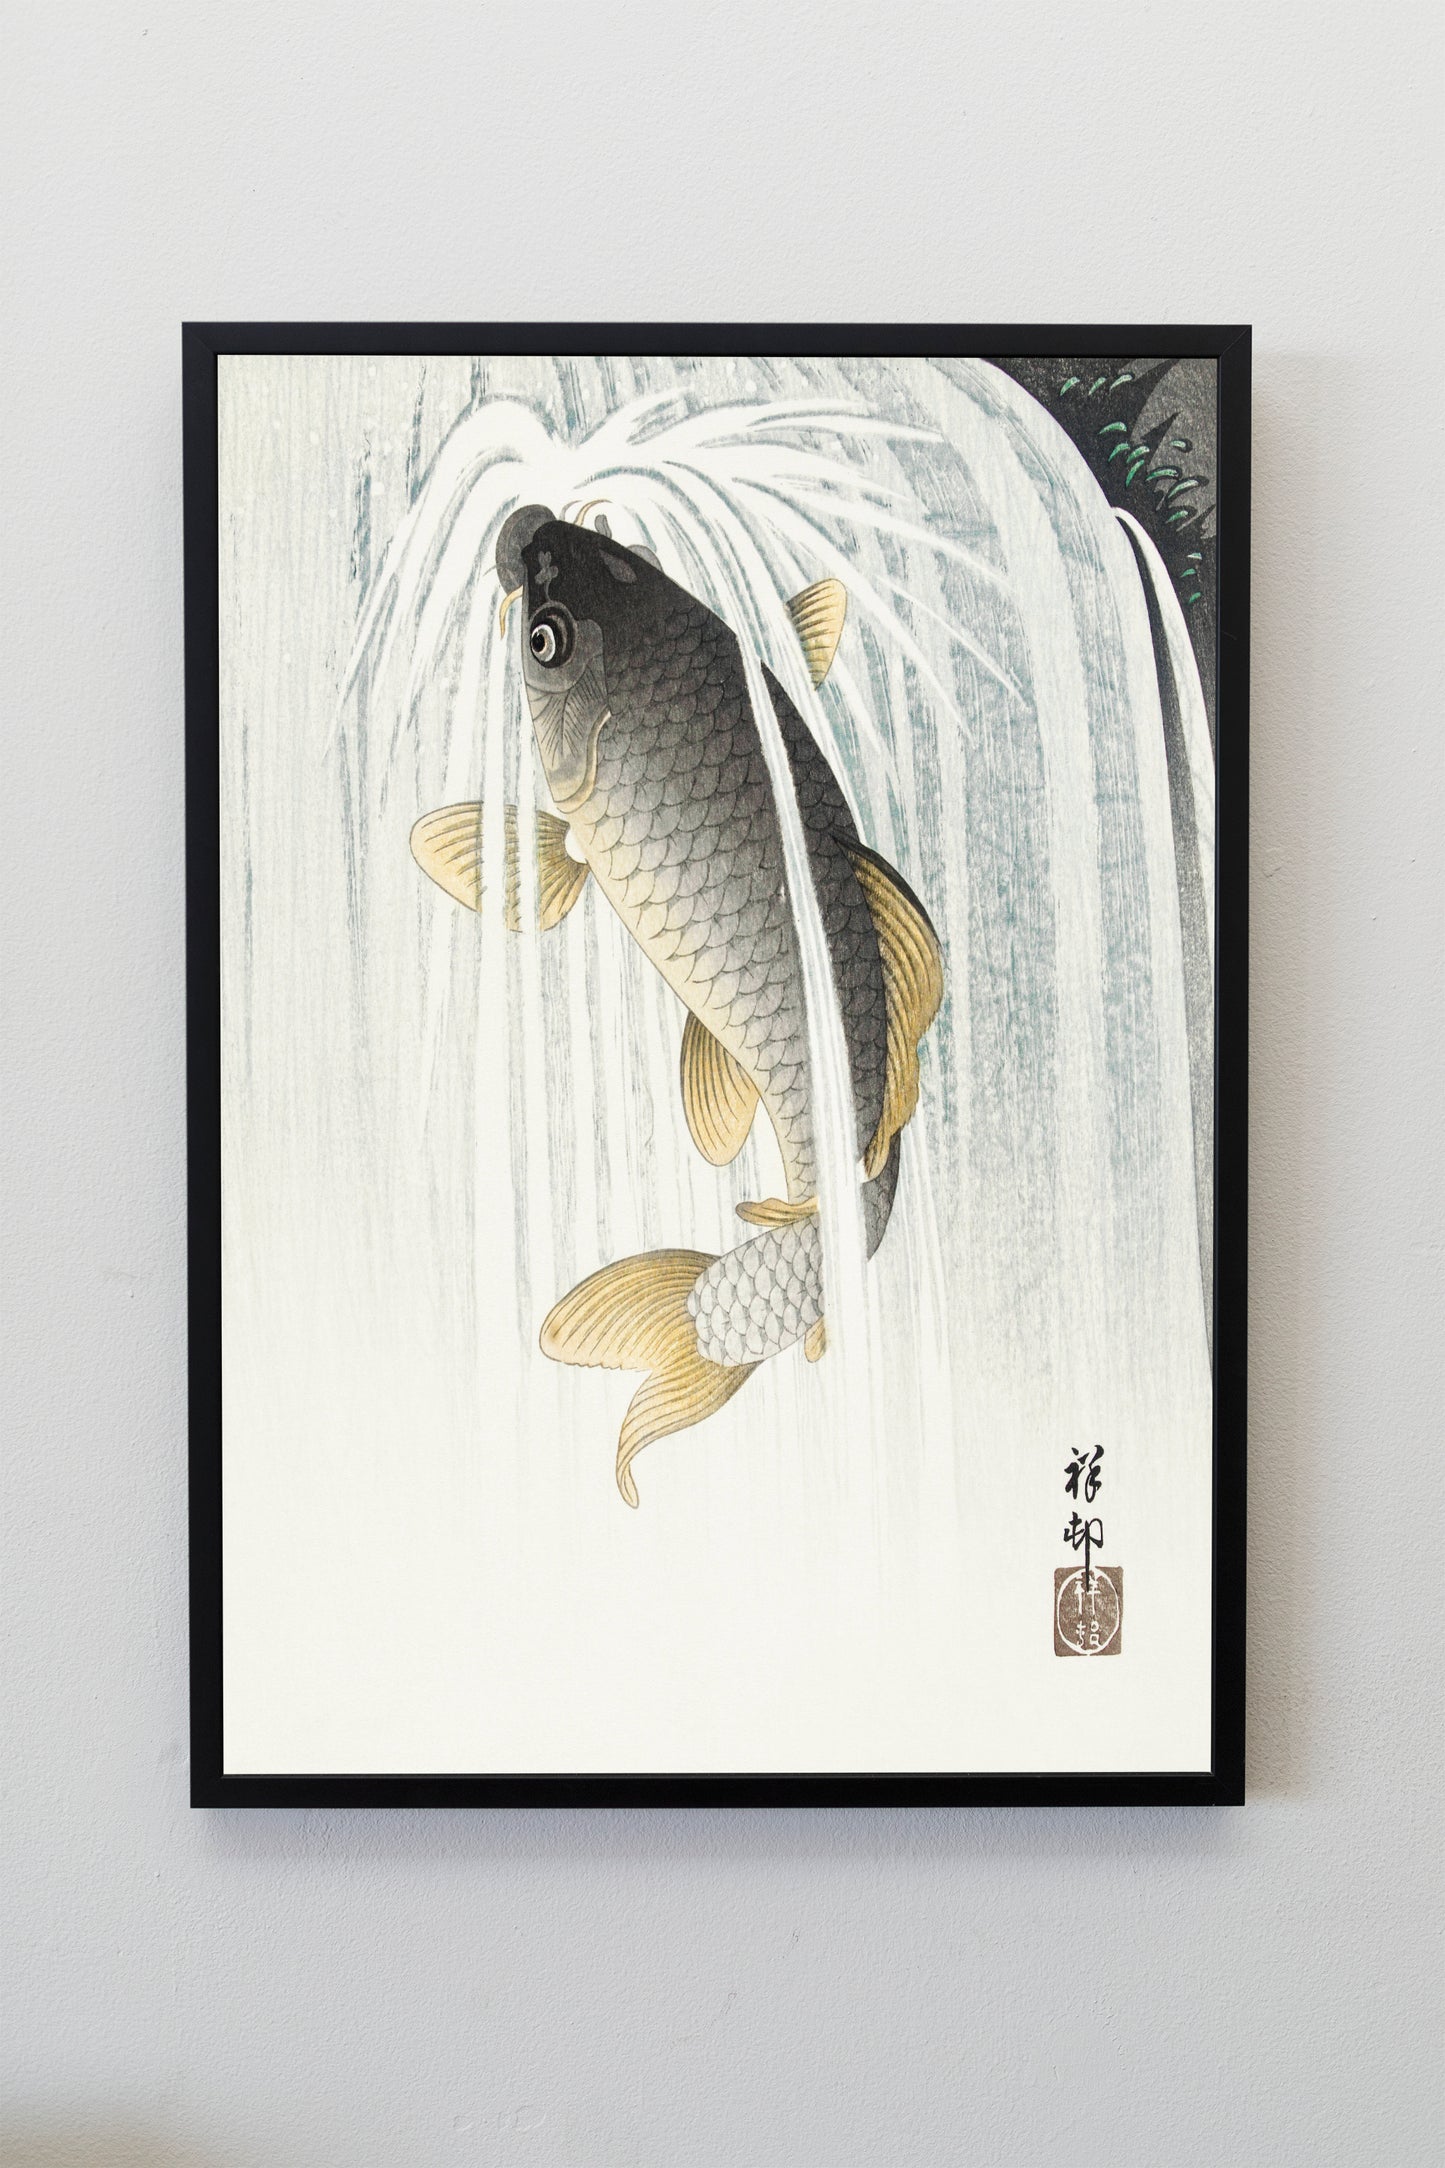 A jumping carp by Ohara Koson Poster Illustration Print Wall Hanging Decor A4 A3 A2